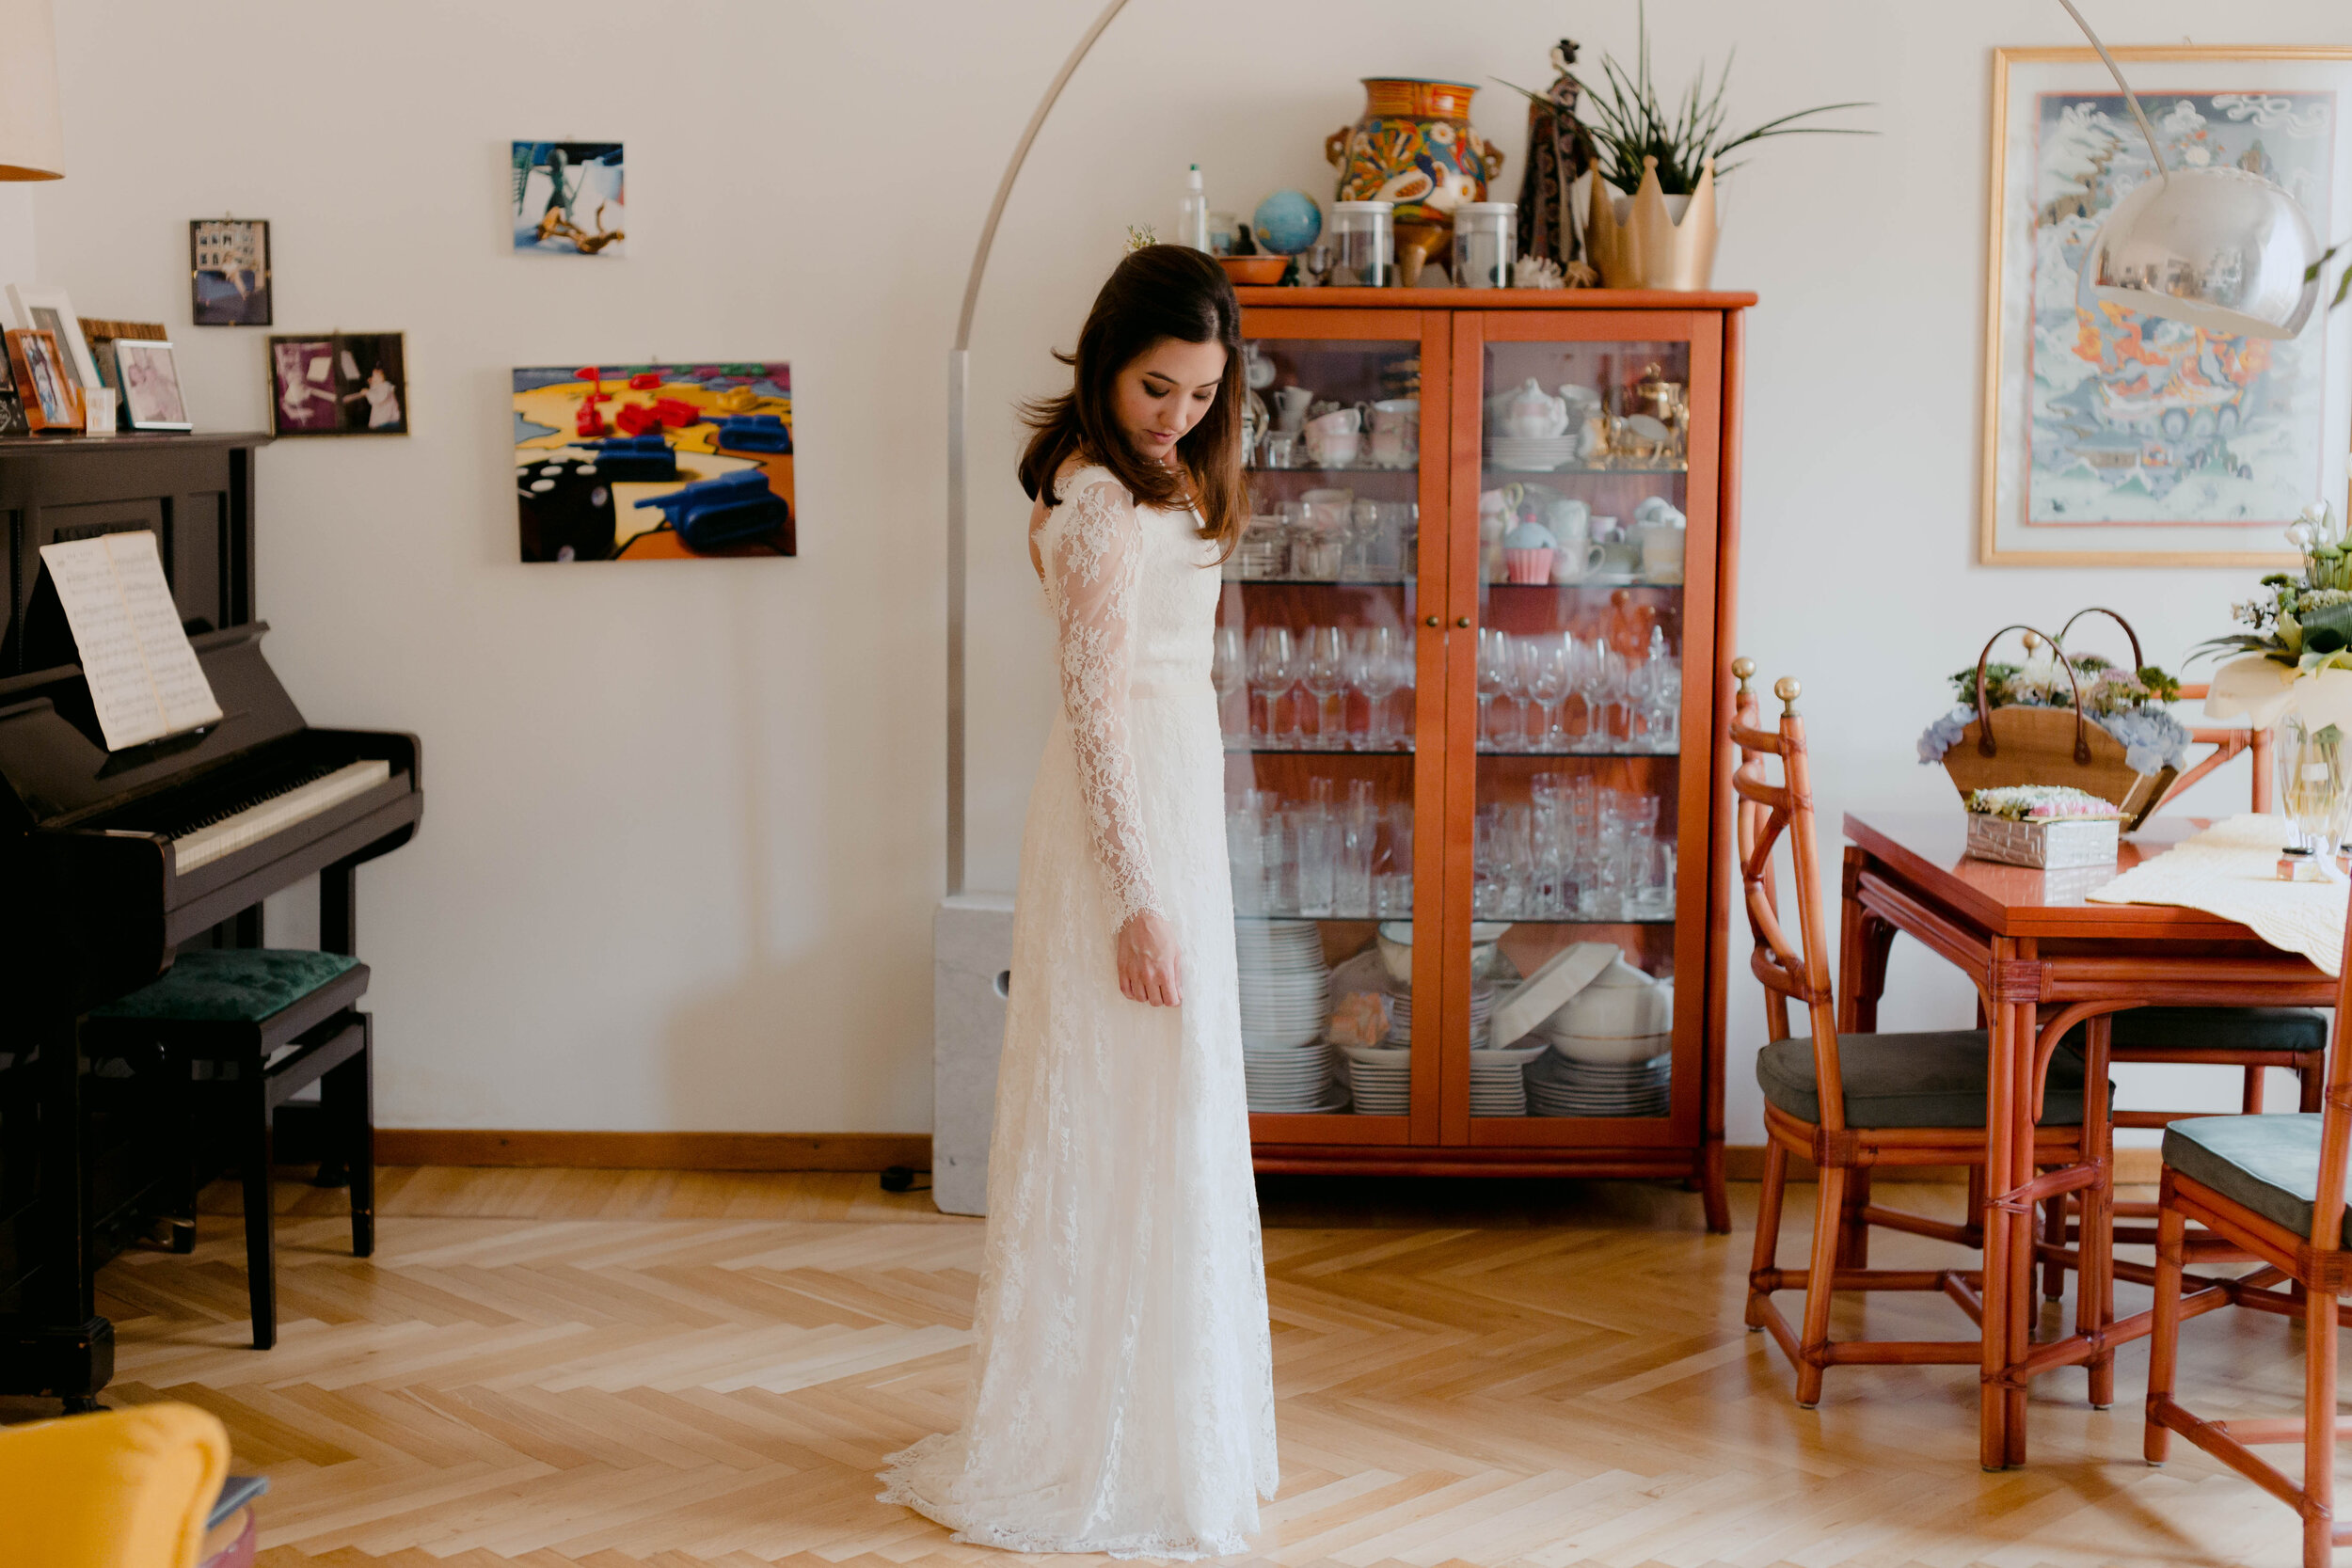 016 - Preparazione sposa - Miriam Callegari Fotografa.jpg